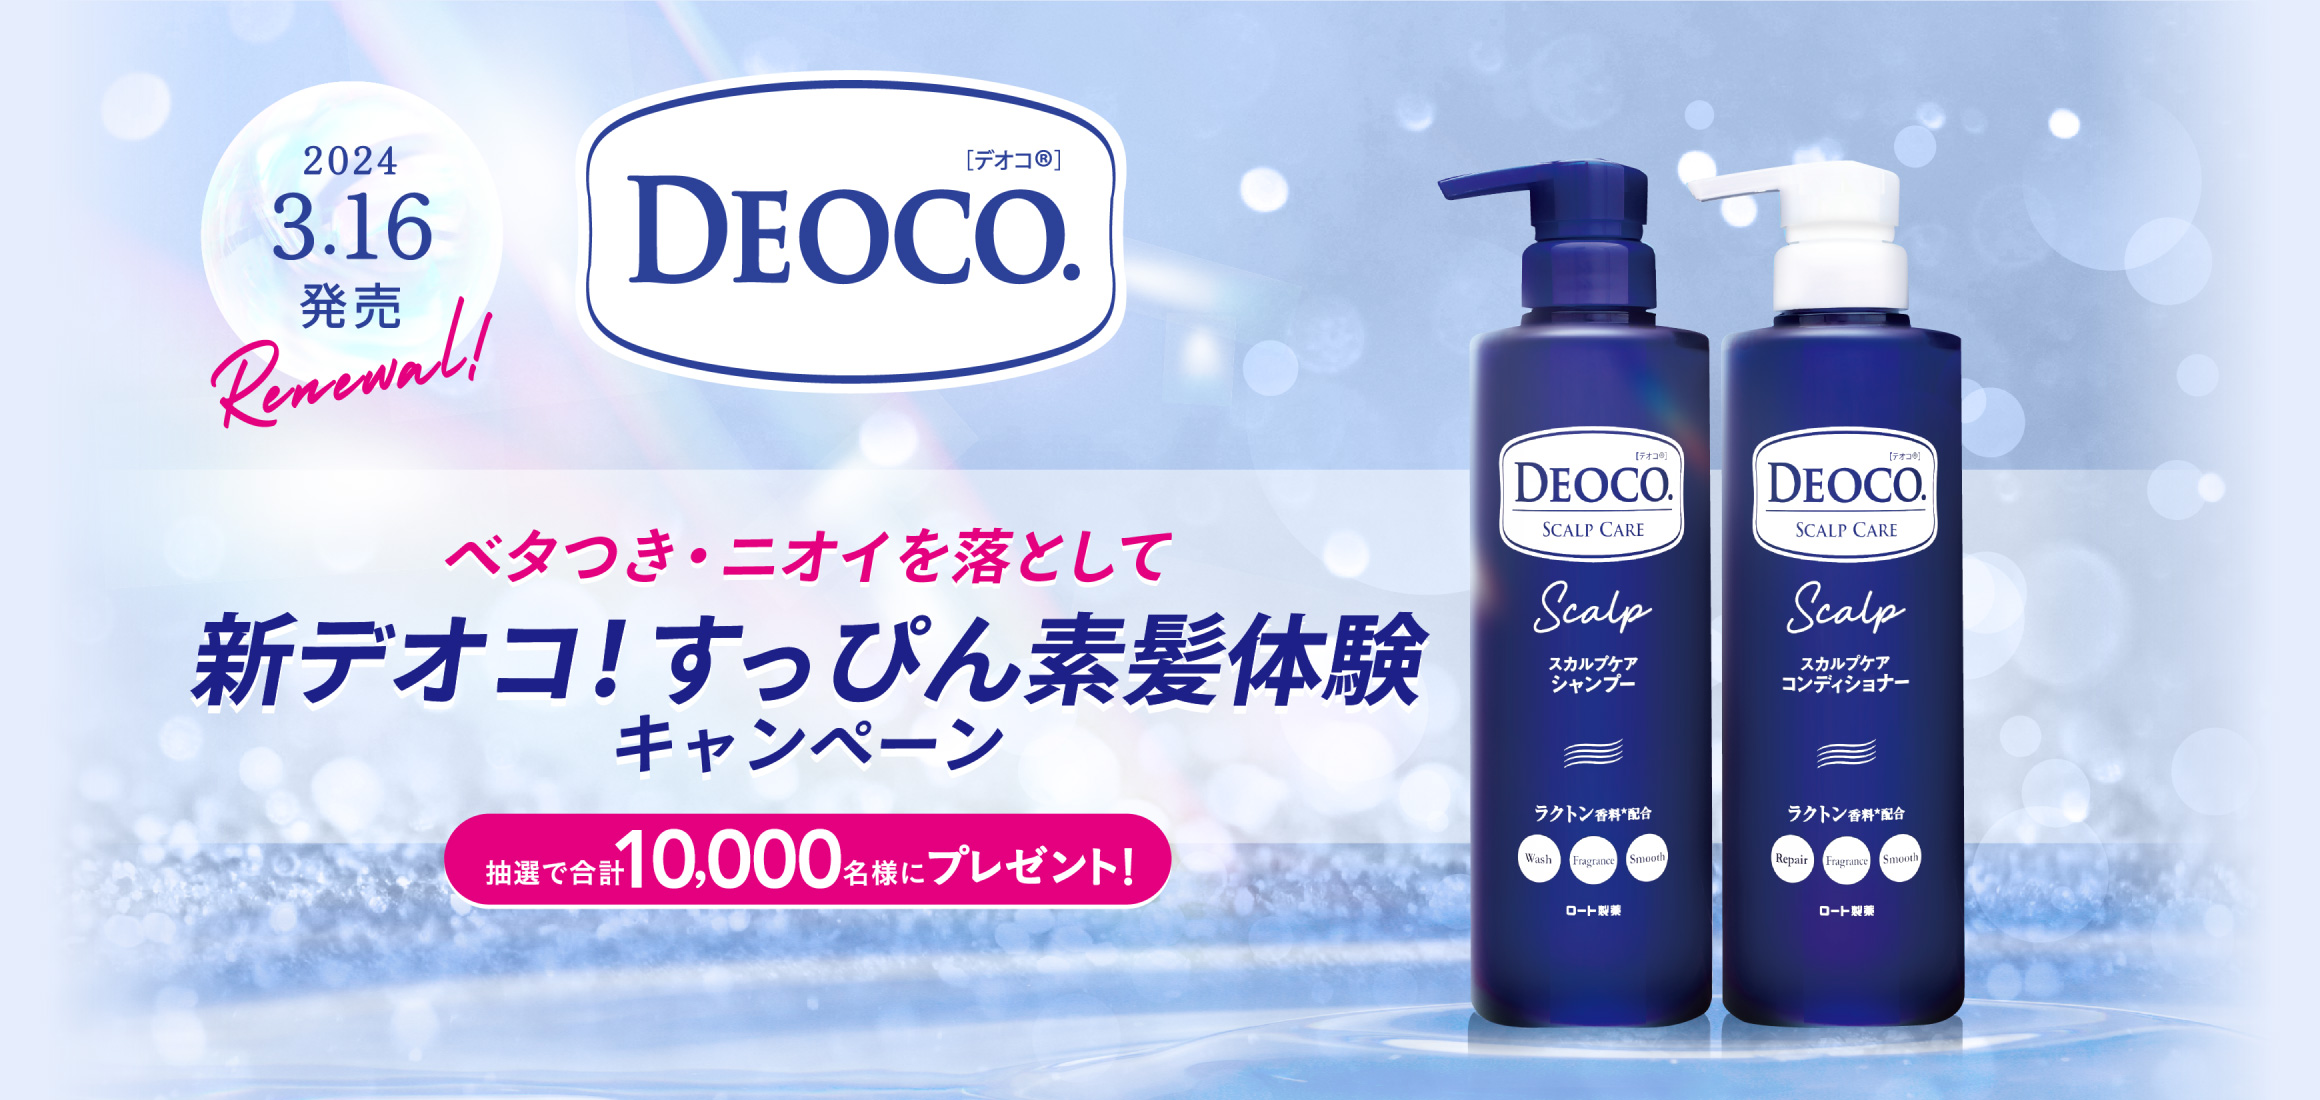 DEOCO　2024.3.16発売　ベタつき・ニオイを落として 新デオコ！すっぴん素髪体験キャンペーン 抽選で合計10,000名様にプレゼント！